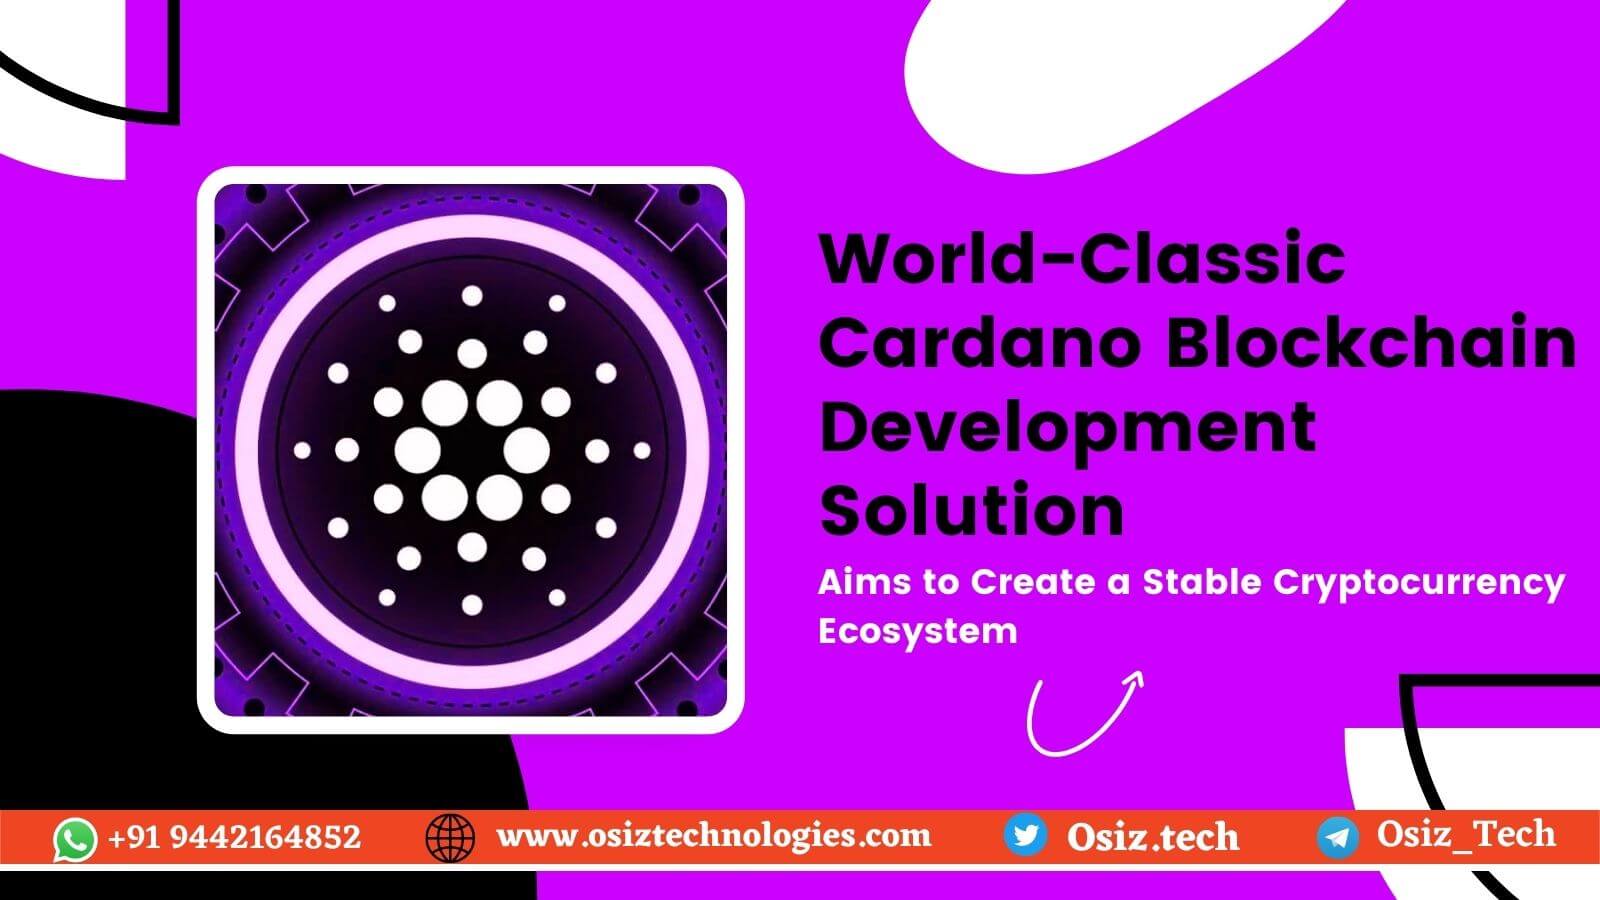 Cardano Blockchain Development company 